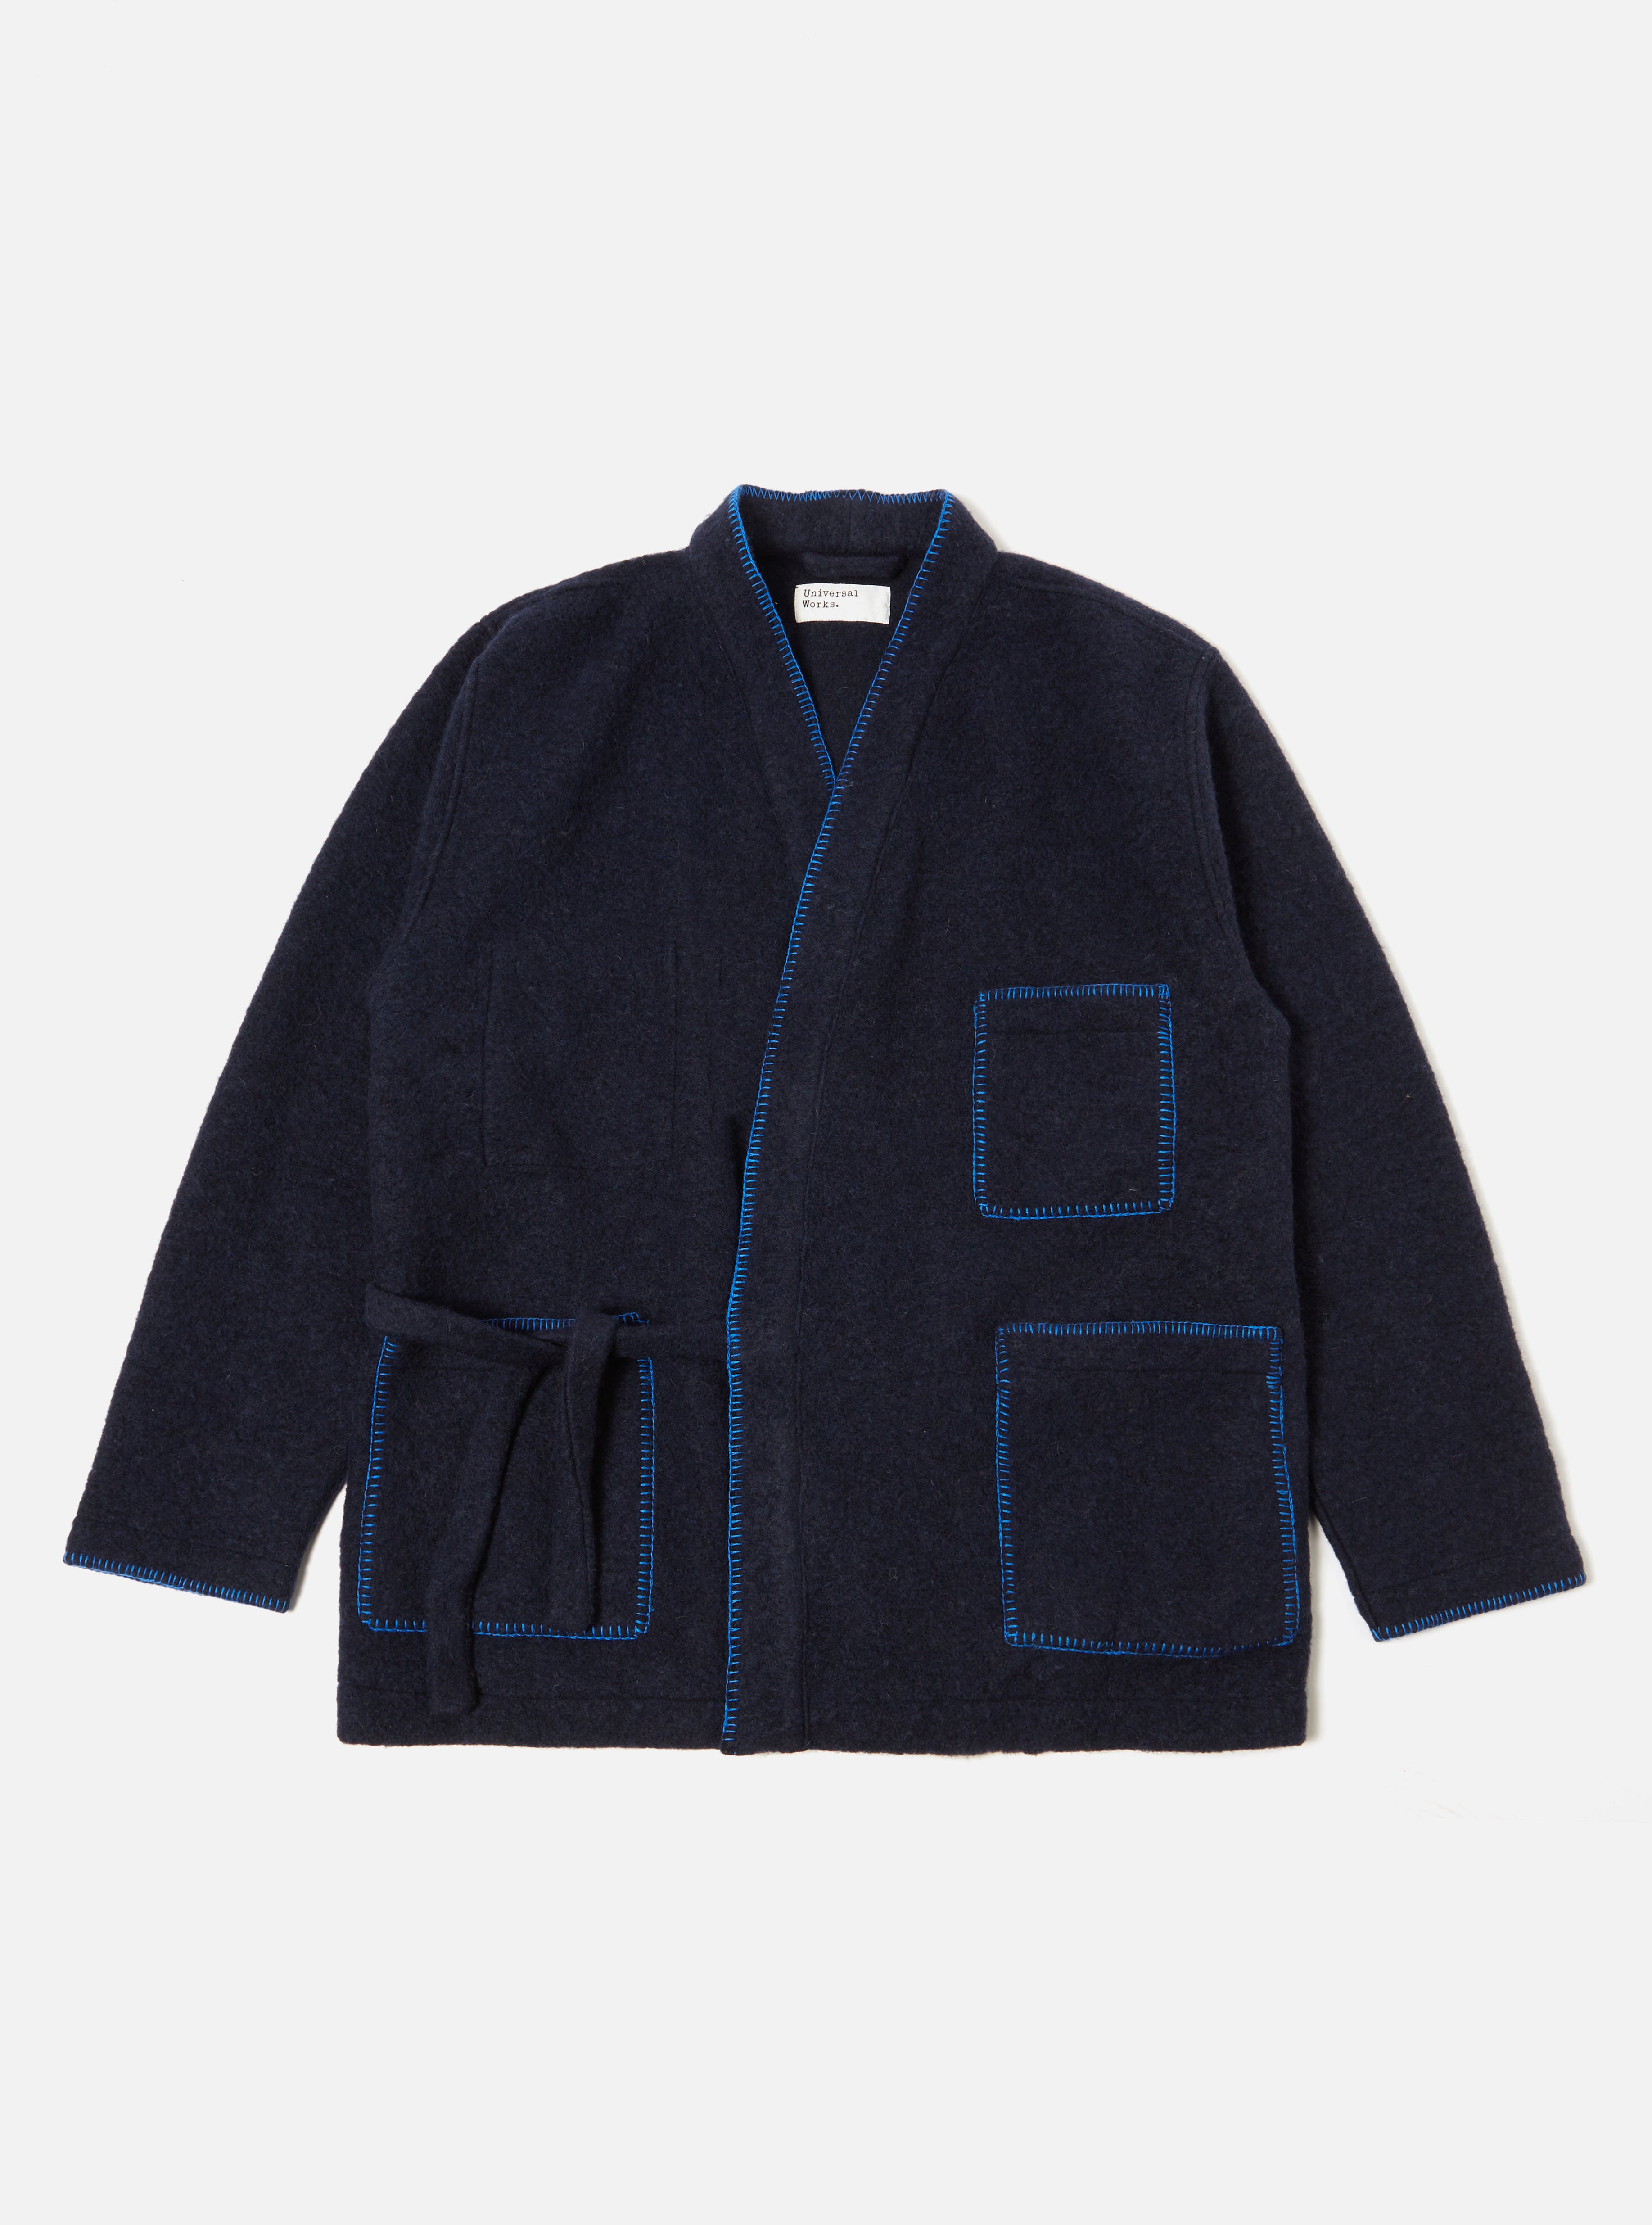 Universal Works Blanket Kyoto Work Jacket in Navy Studio Wool Mix